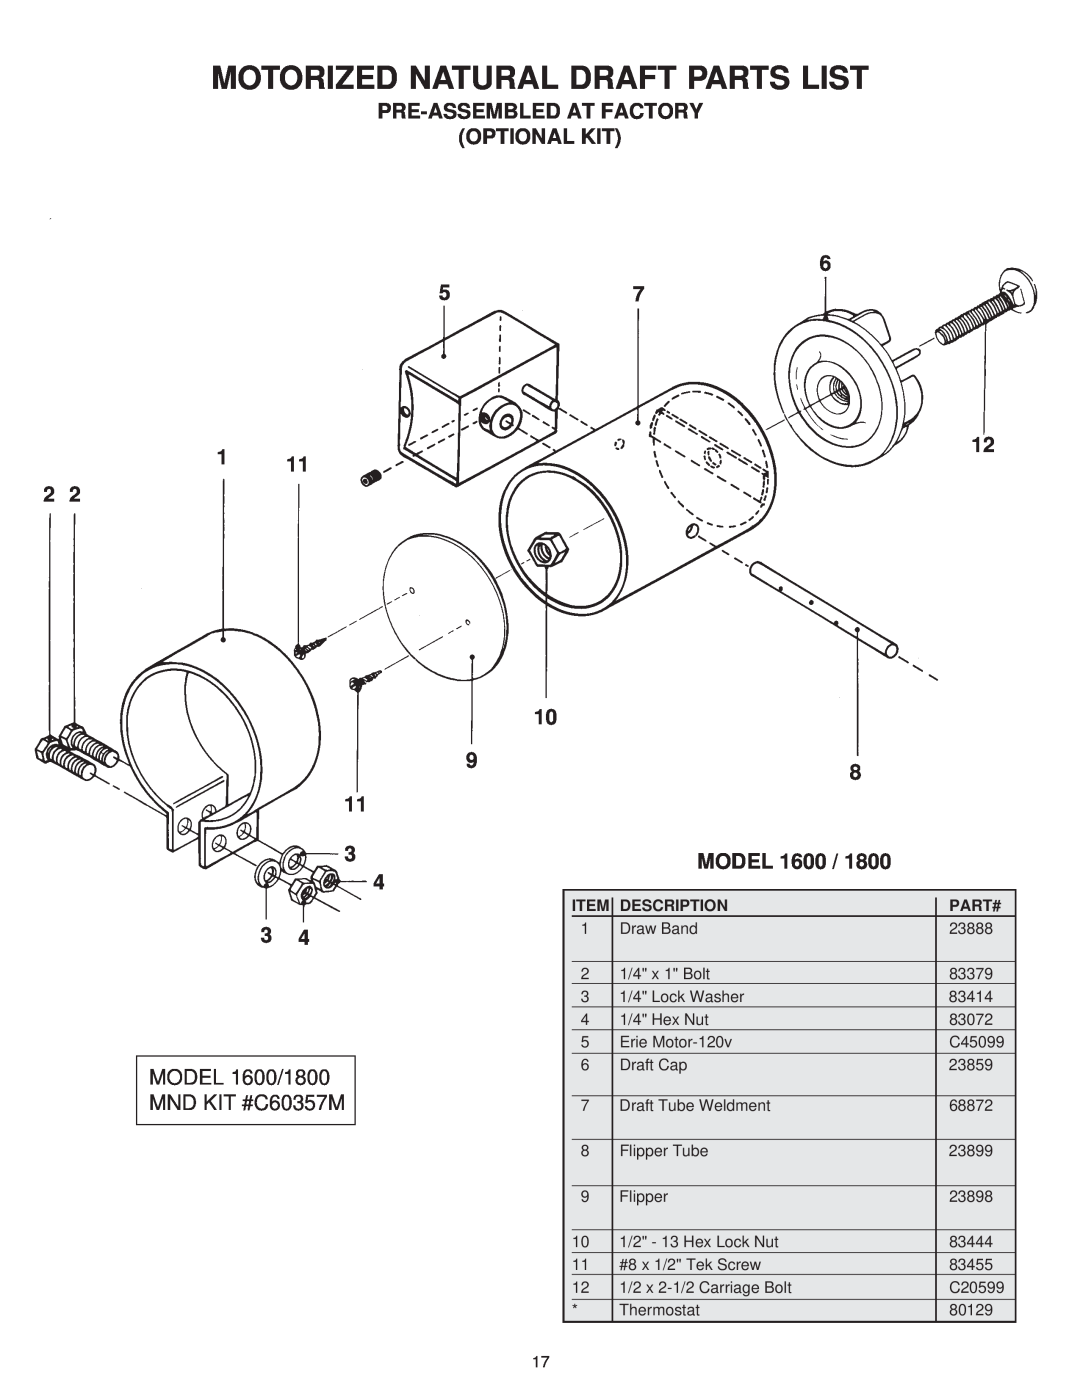 United States Stove 1600, 1800 manual Motorized Natural Draft Parts List, Pre-Assembledat Factory Optional Kit, Model 